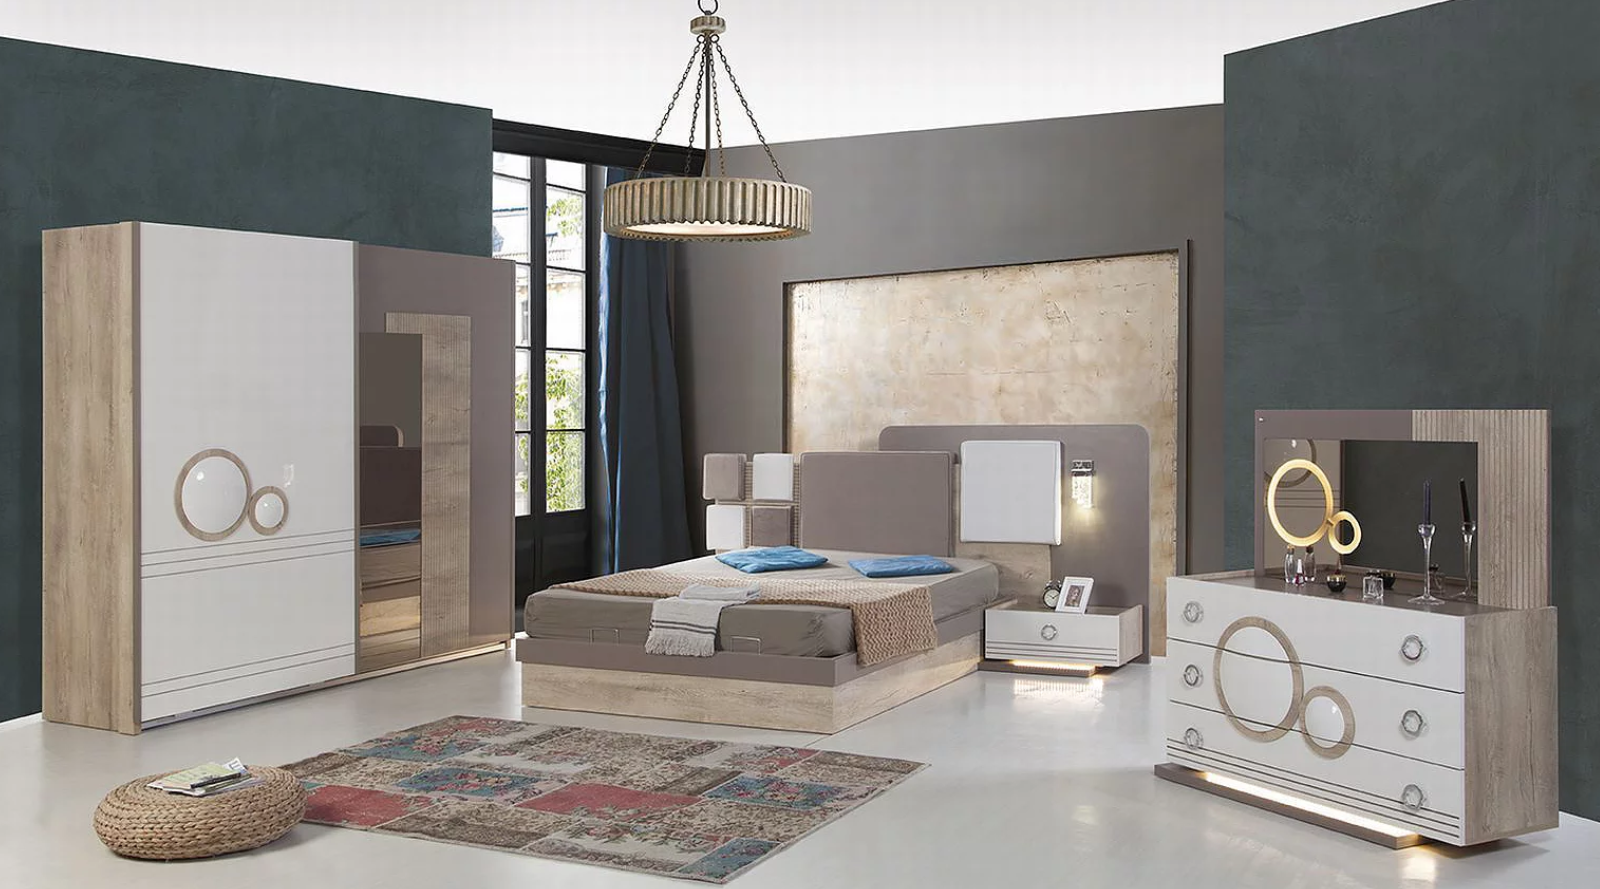 اجمل تصميم غرف نوم مودرنbeautiful Design Of Modern Bedrooms قصر